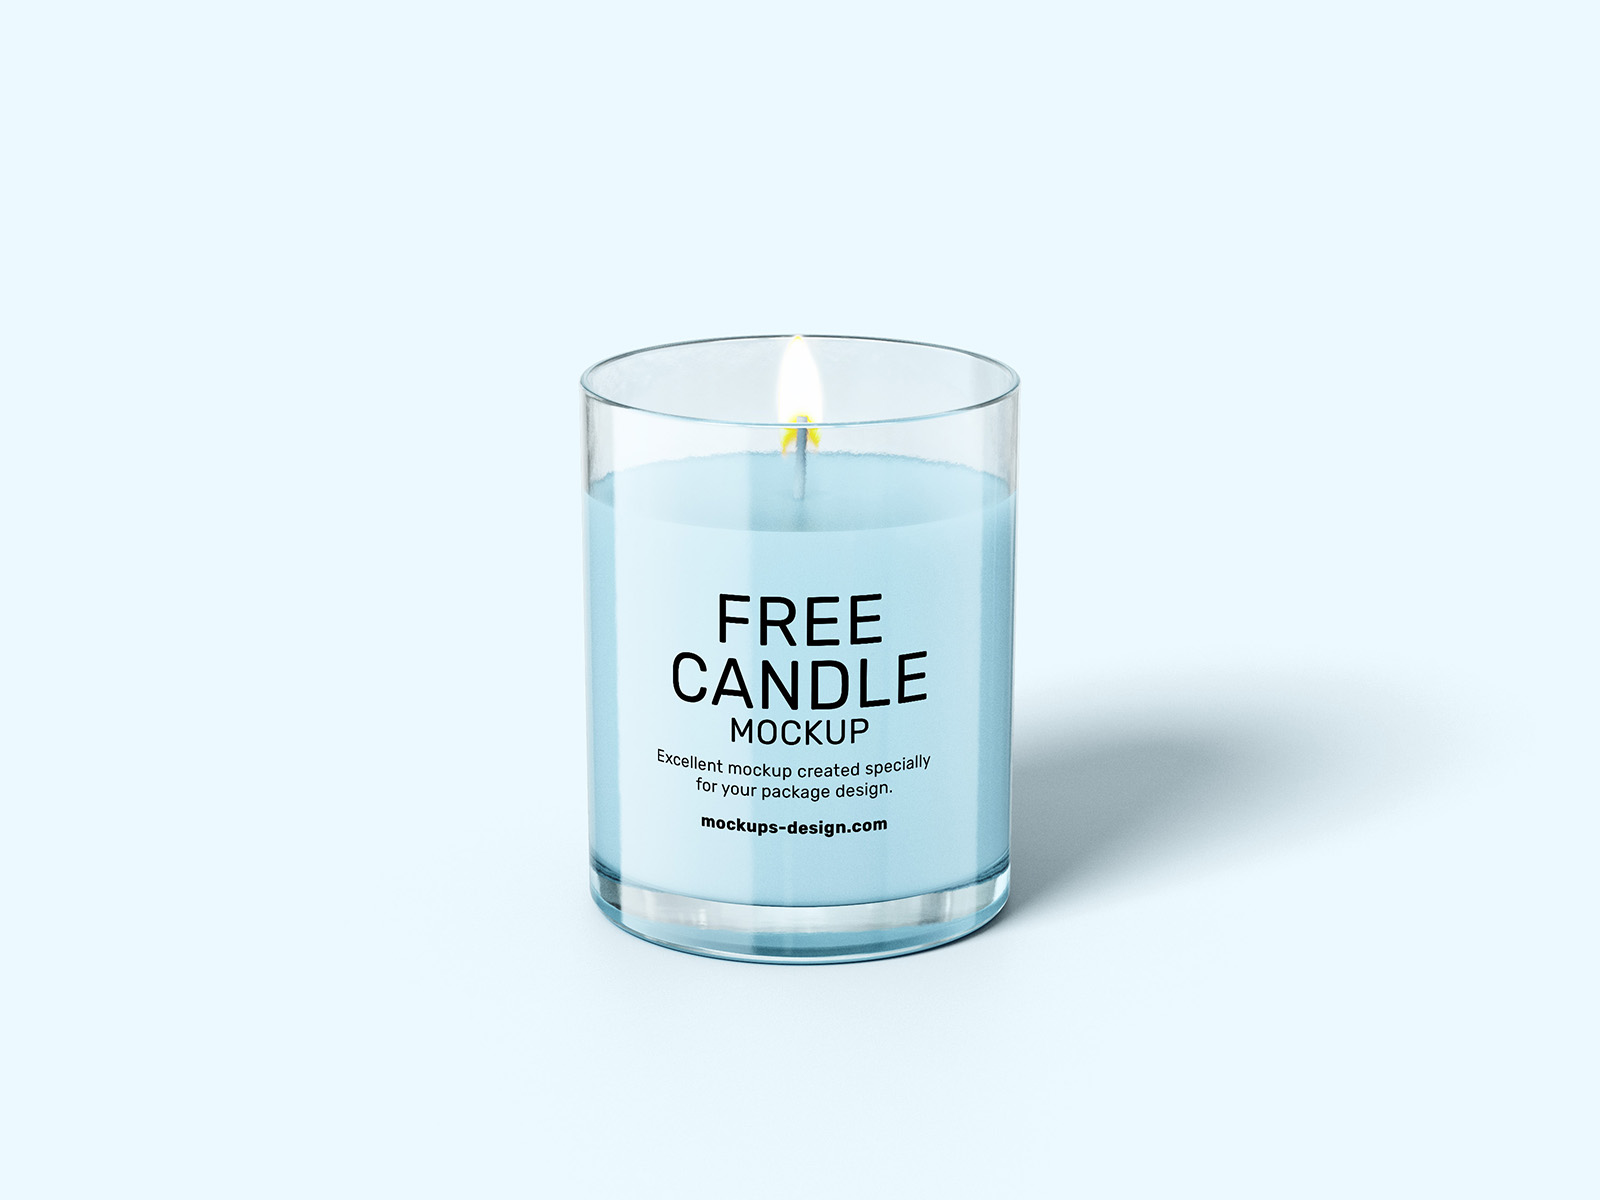 Free candle mockup